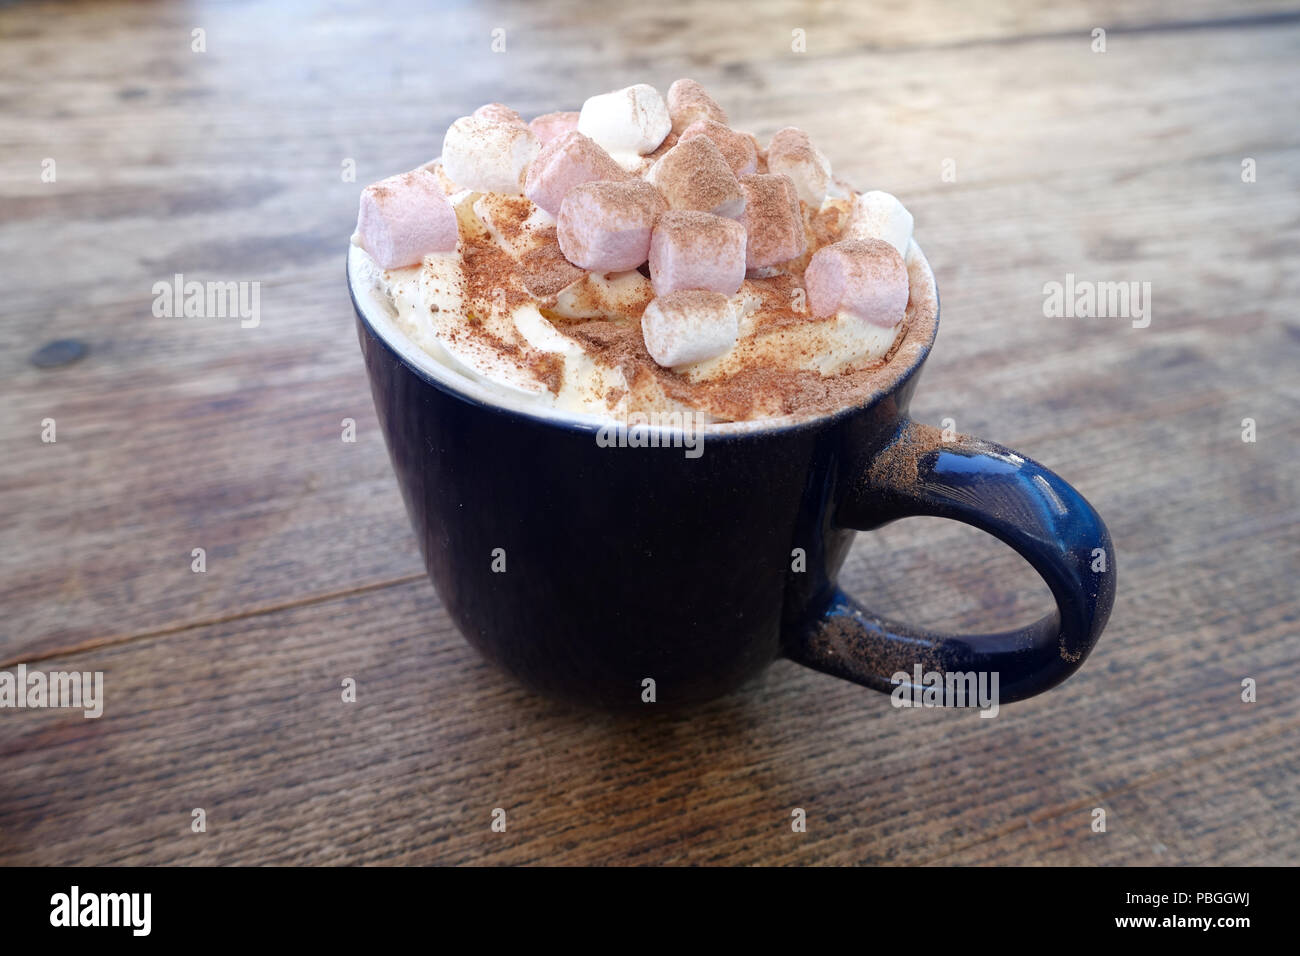 Cola Cao,hot chocolate drink Stock Photo - Alamy